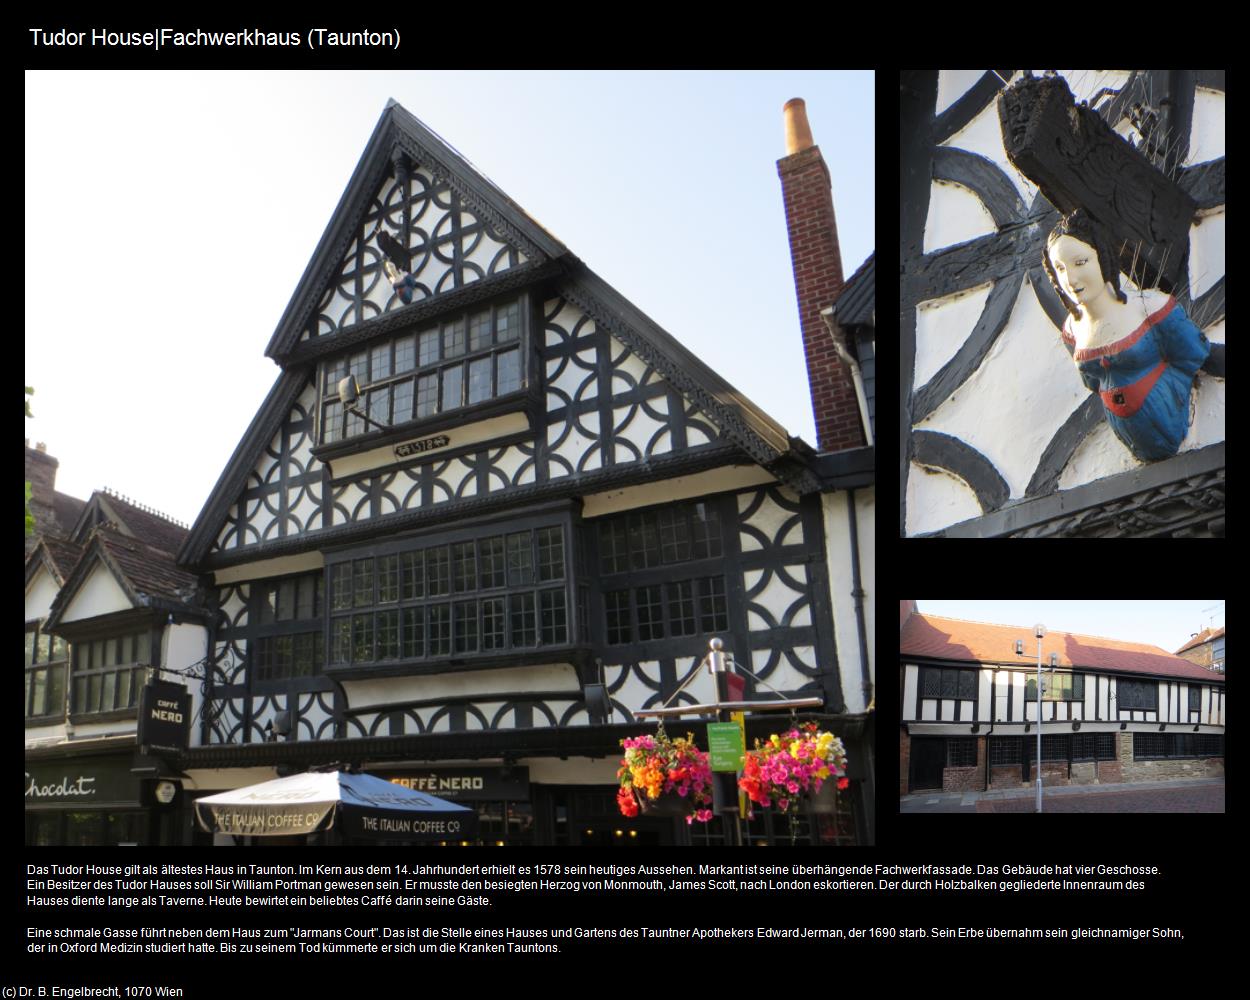 Tudor House|Fachwerkhaus (Taunton, England) in Kulturatlas-ENGLAND und WALES